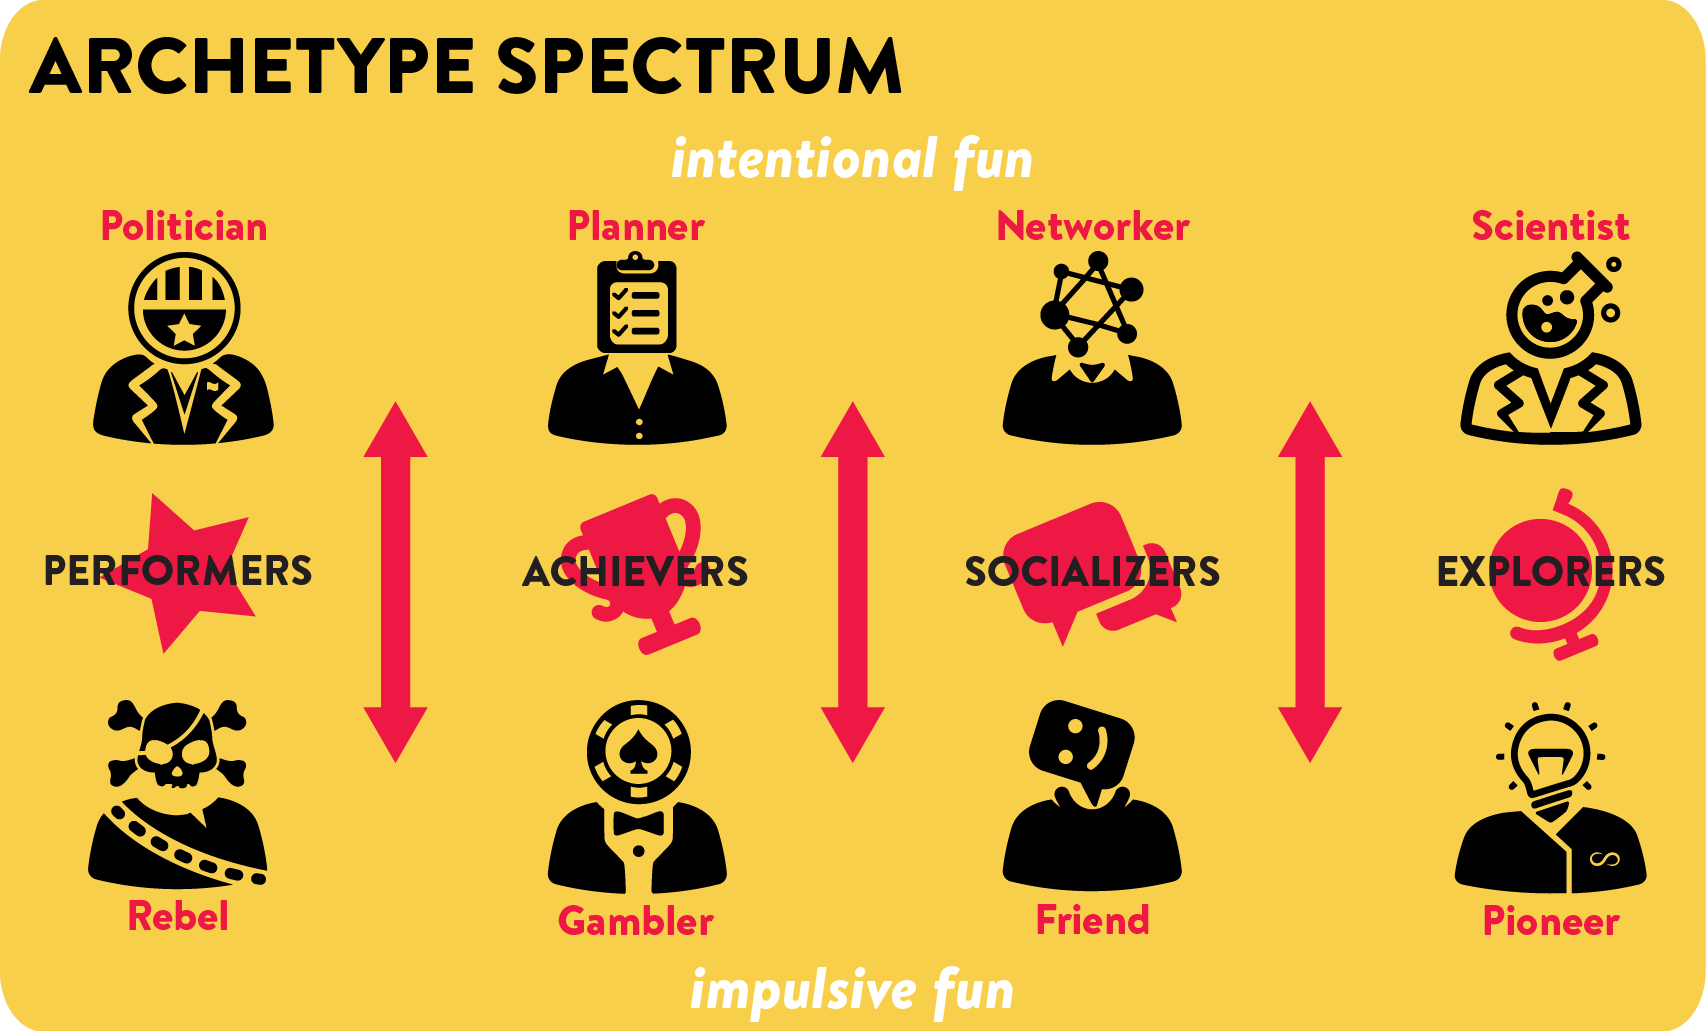 Archetype Spectrum: intentional vs. impulsive